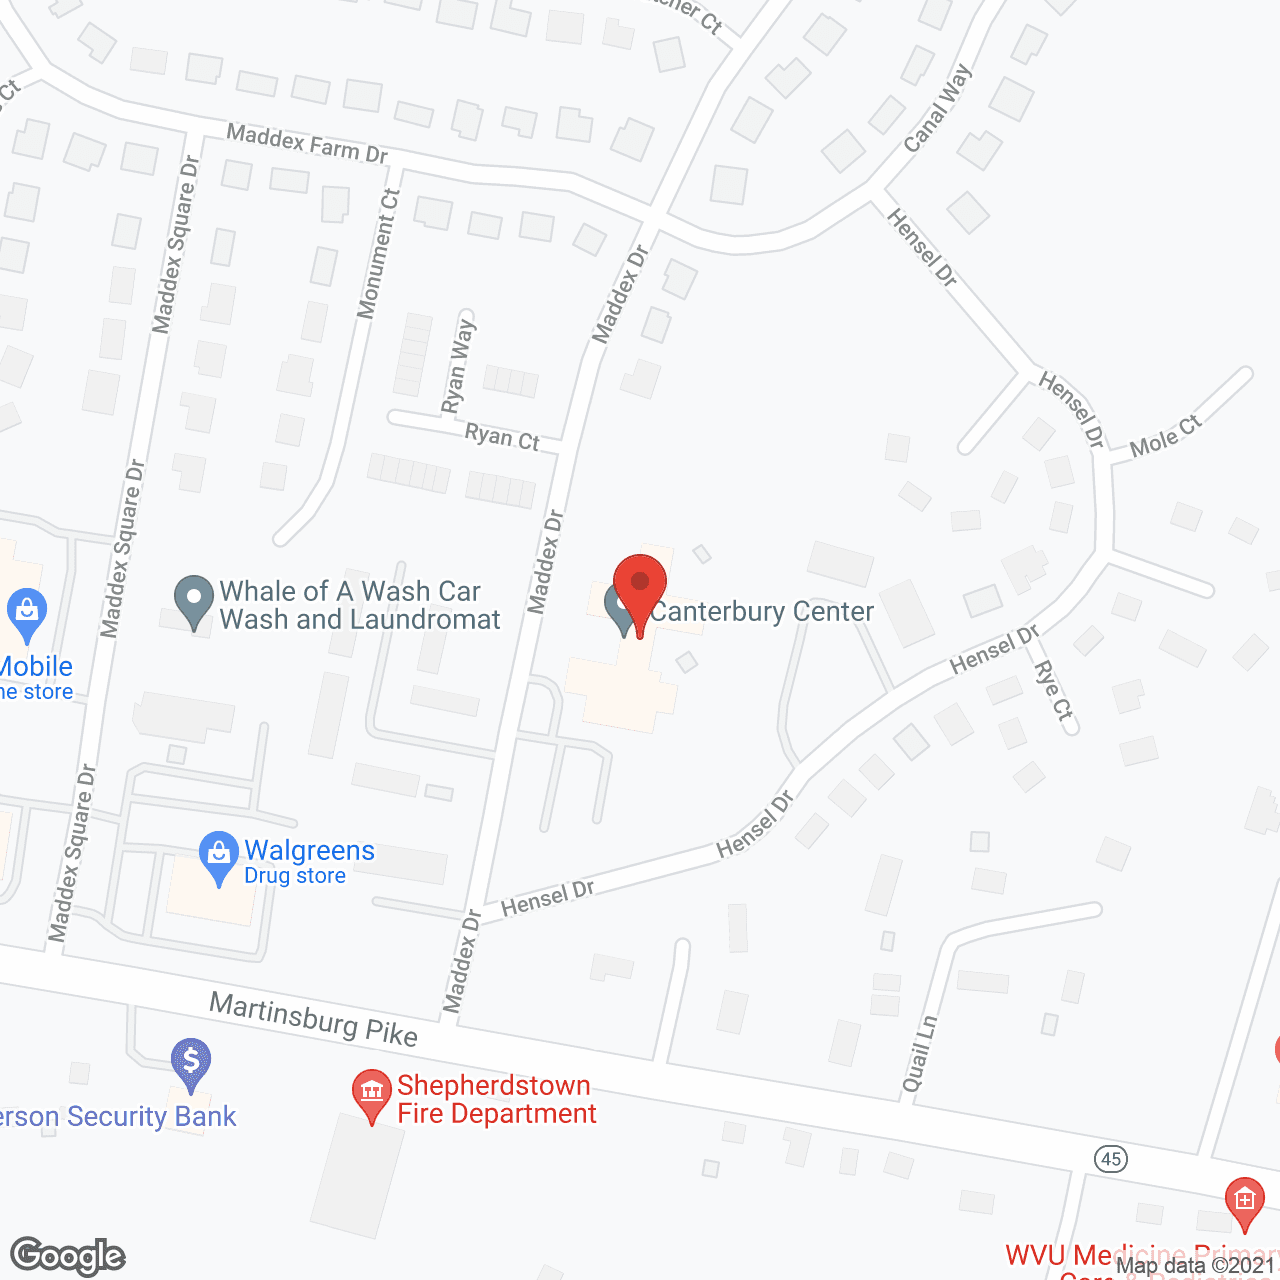 Canterbury Center in google map